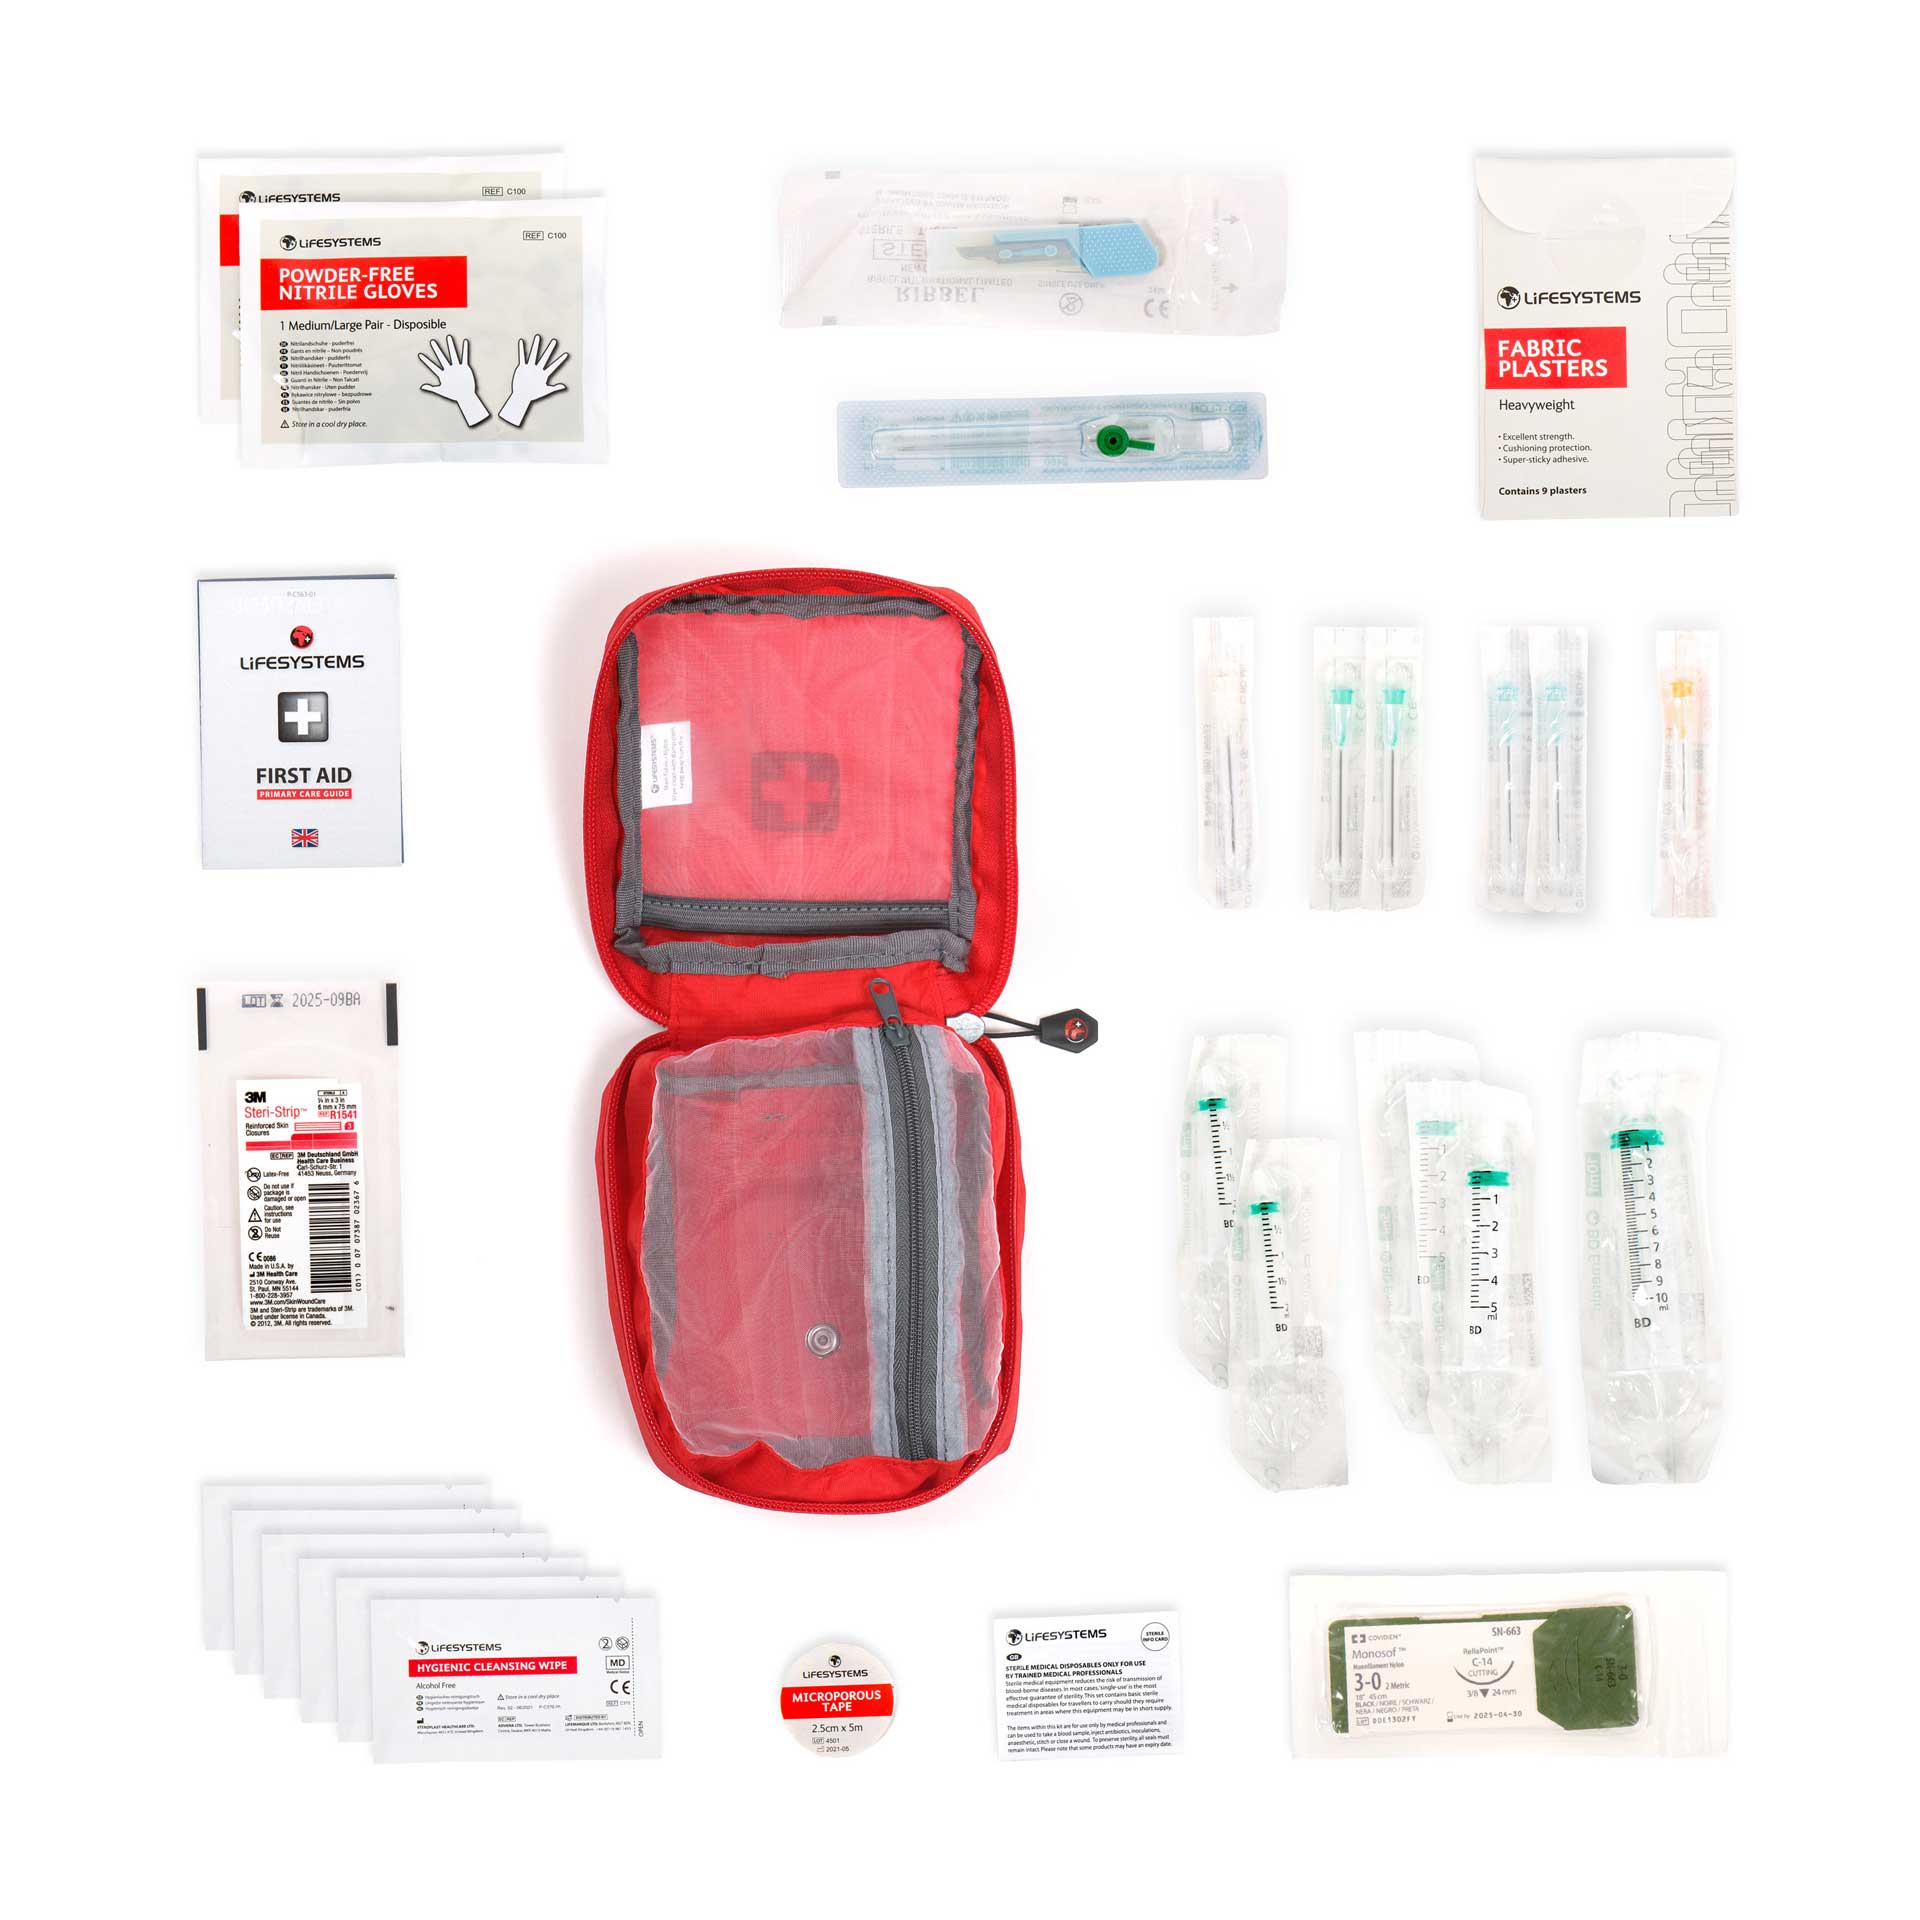 Nurse Survival Kit -  Canada